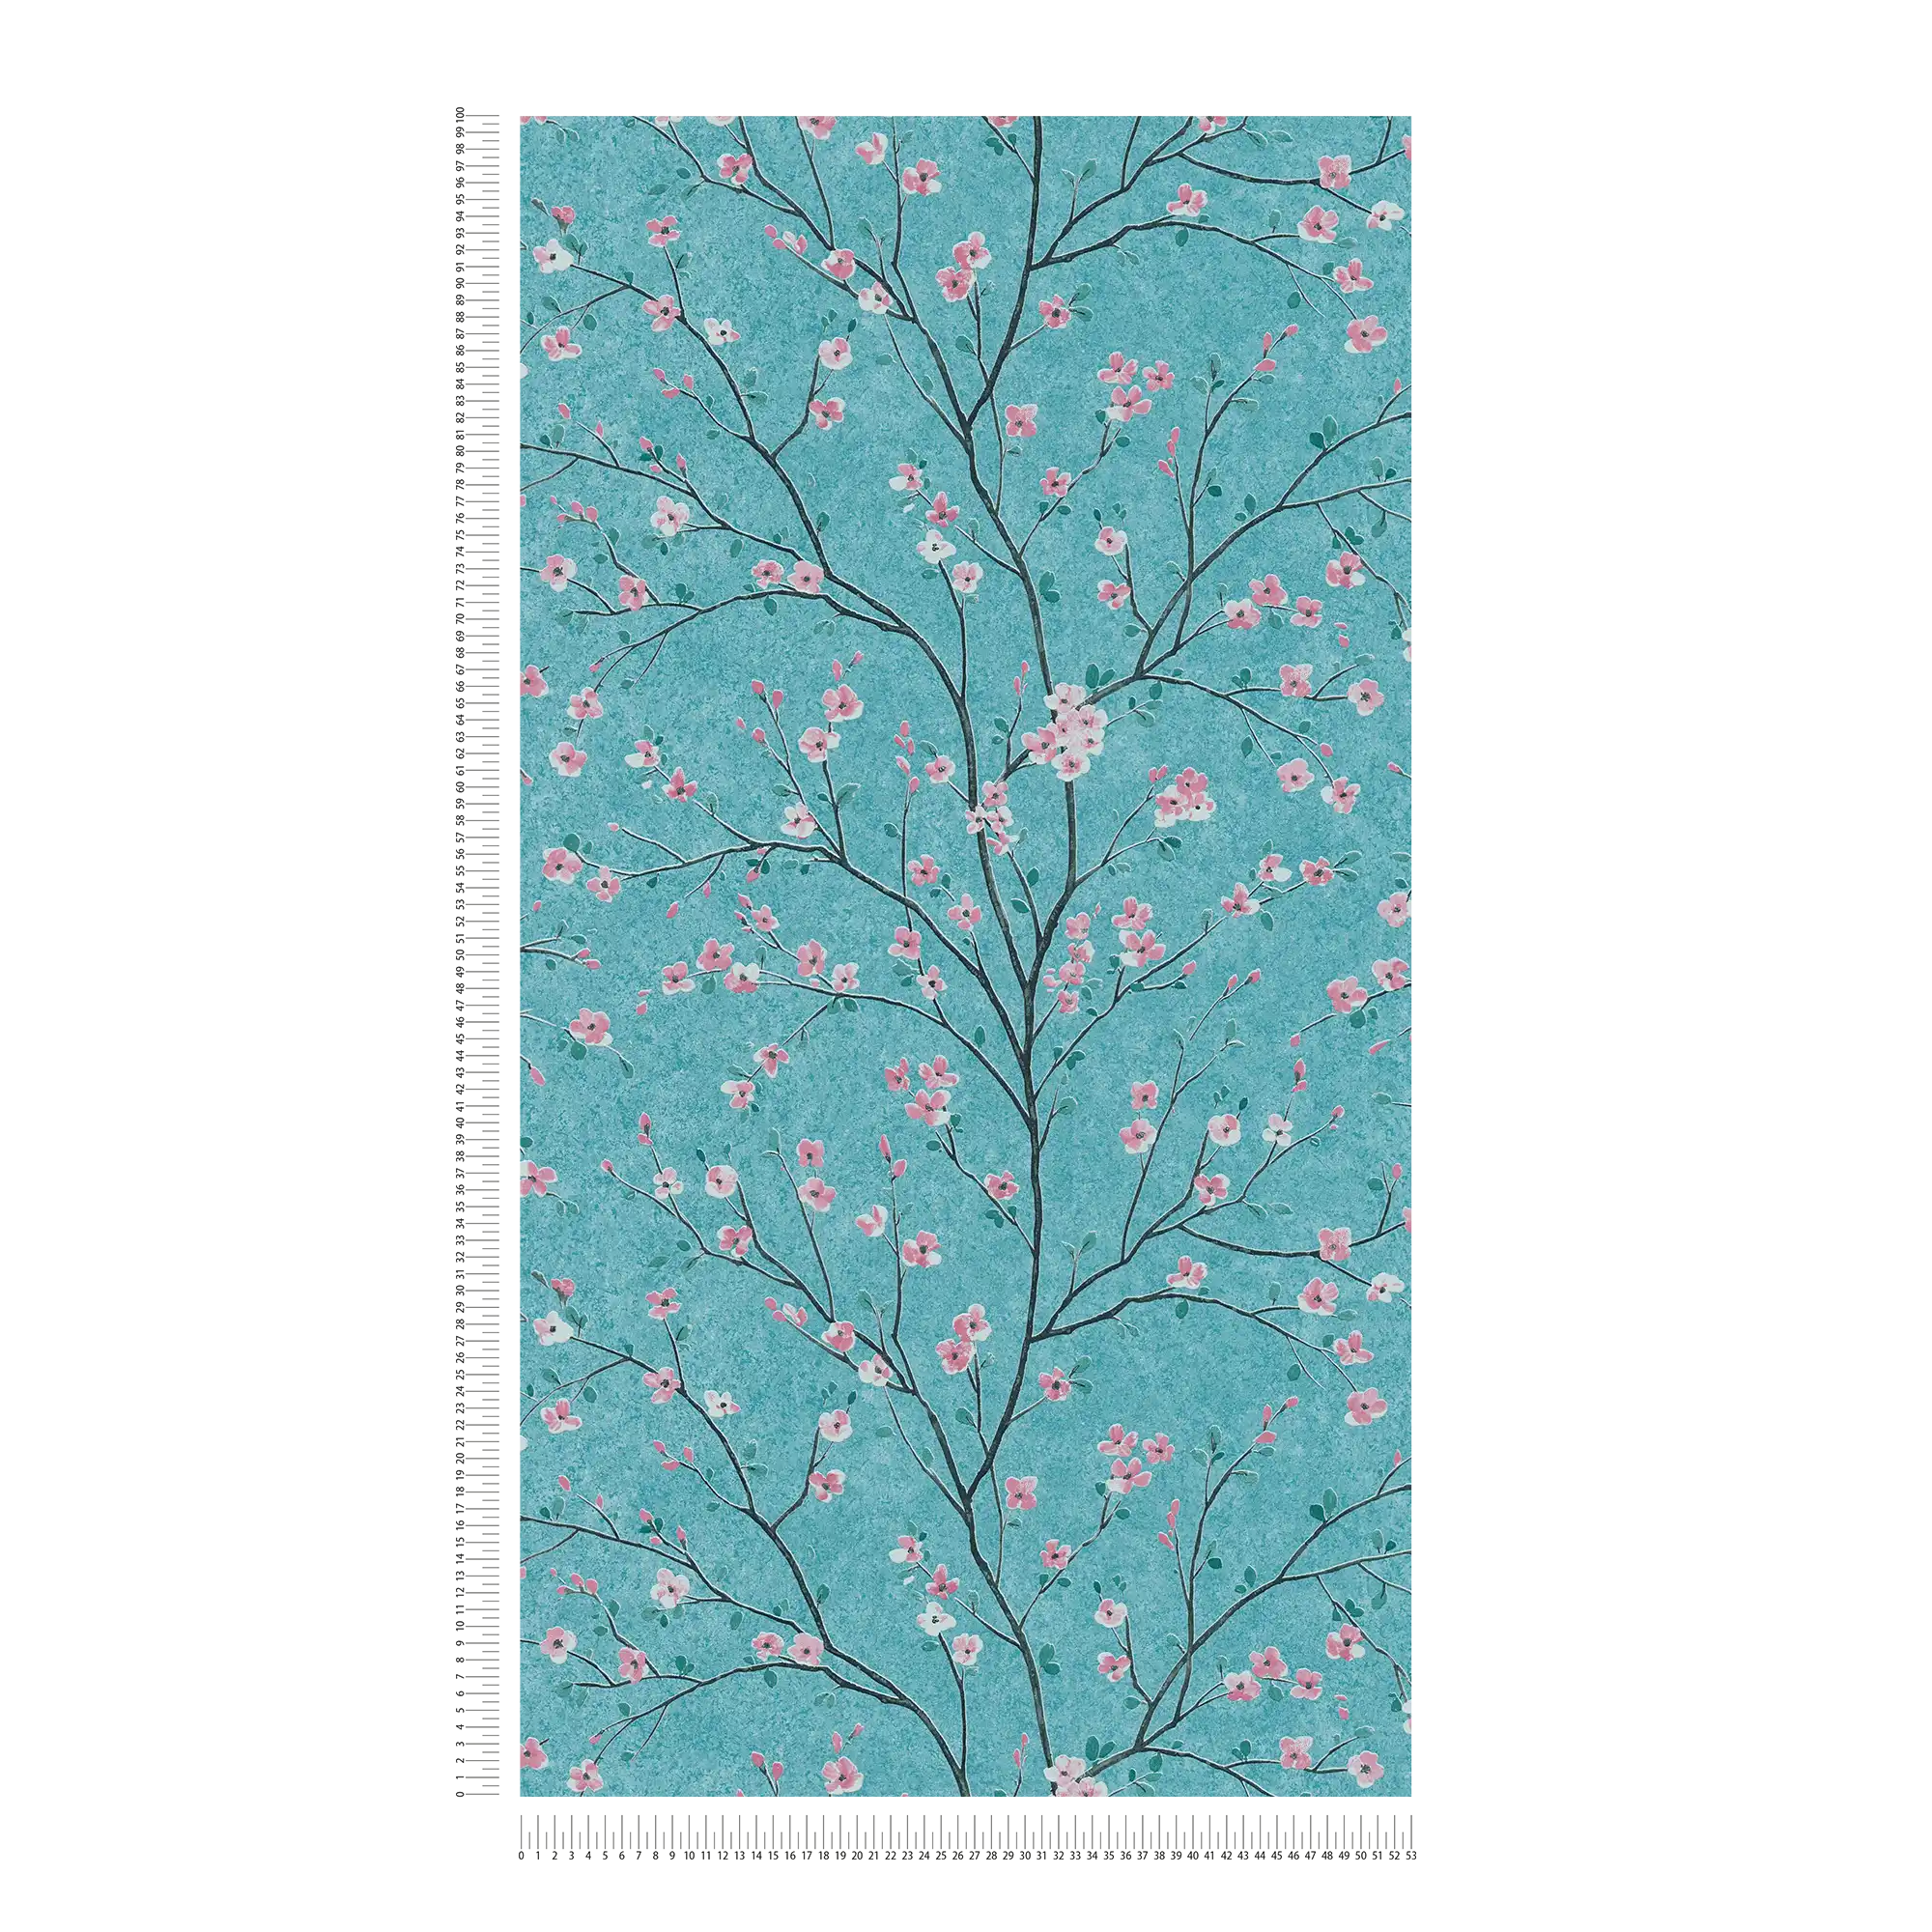             Japanese cherry blossom wallpaper - blue, green, pink
        